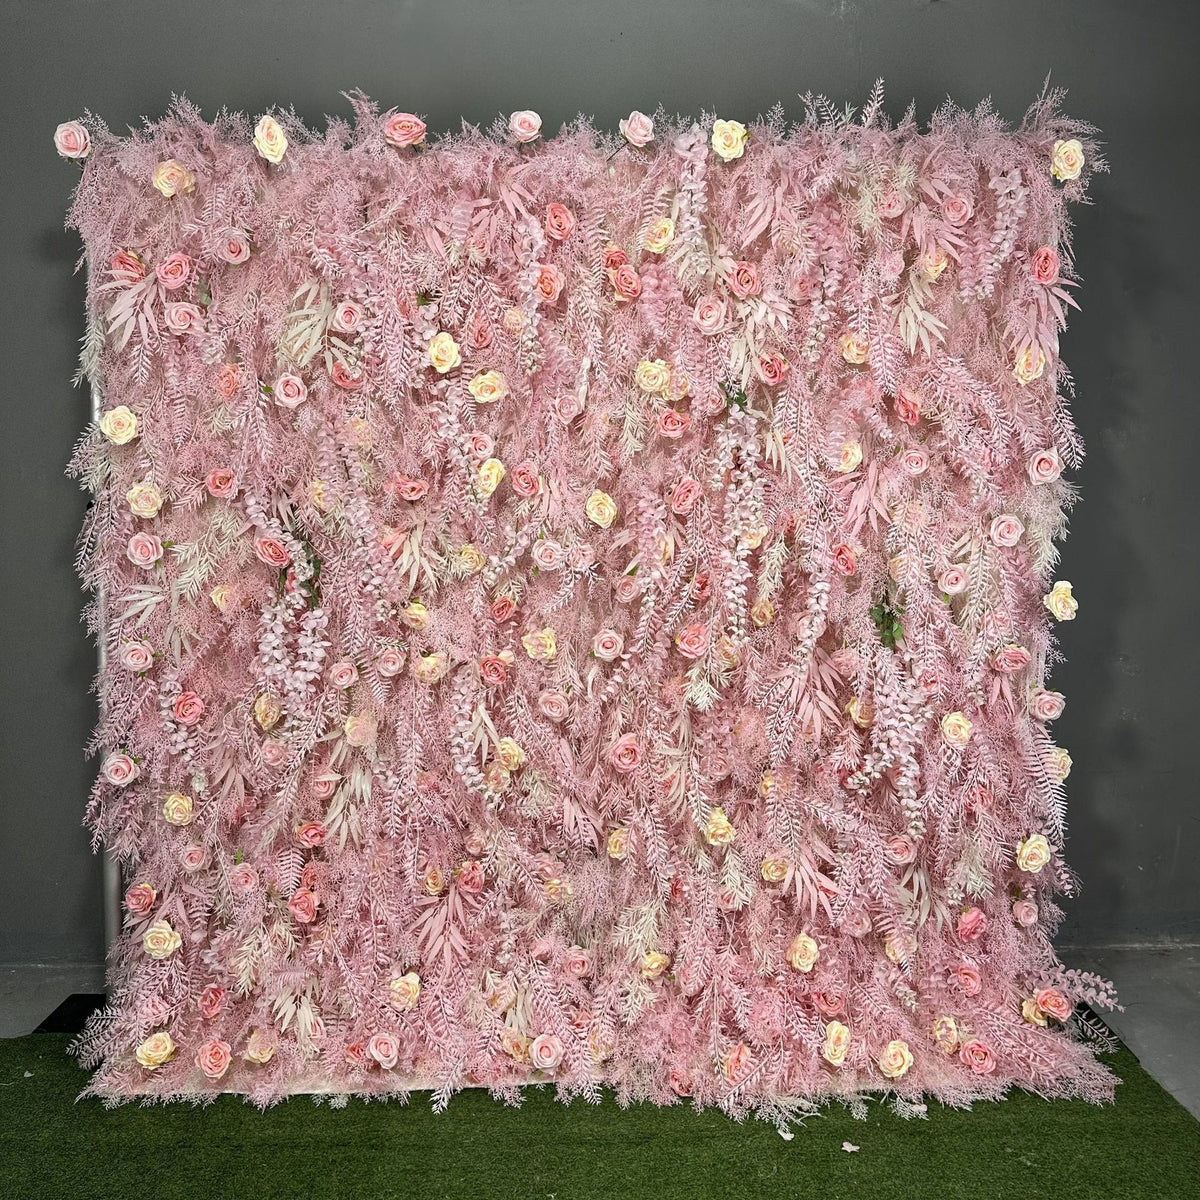 3D Artificial Flower Wall Arrangement Wedding Party Birthday Backdrop Decor HQ3975